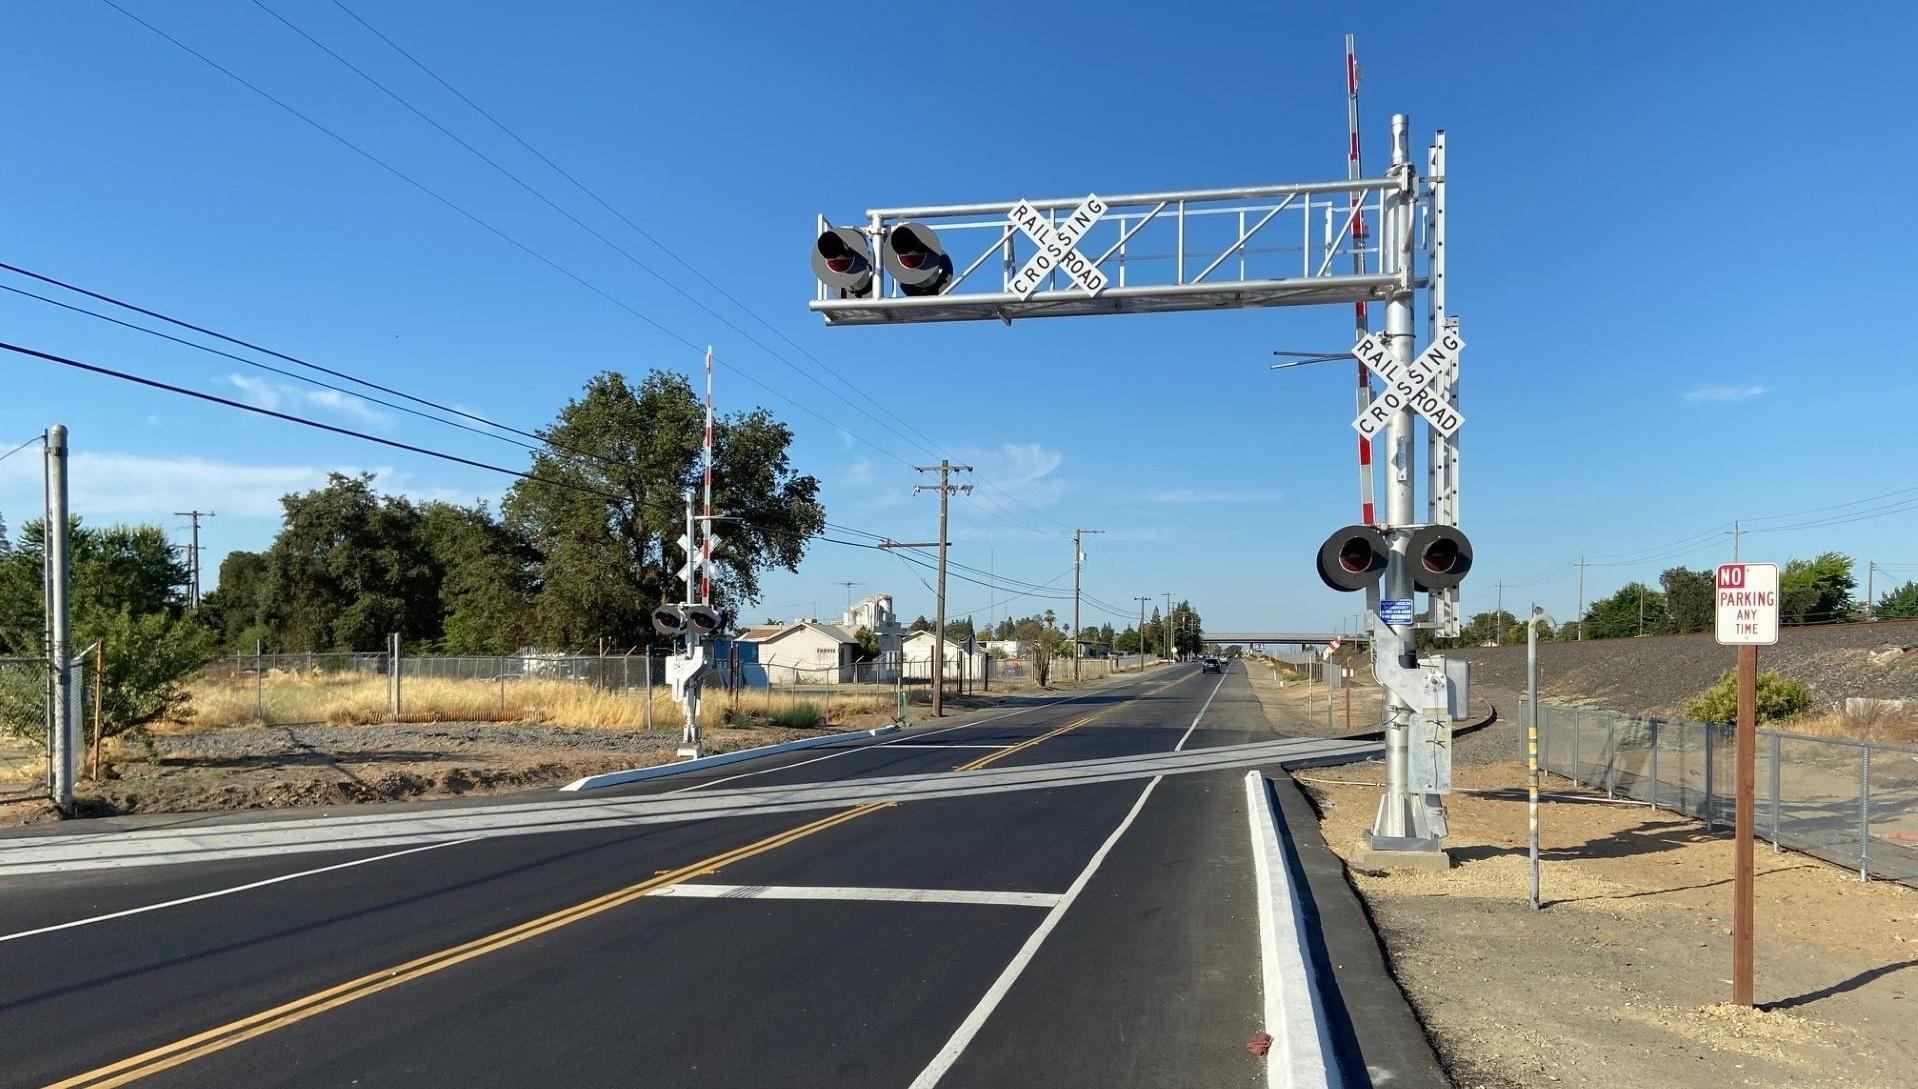 Highway-Rail Grade Crossings Overview